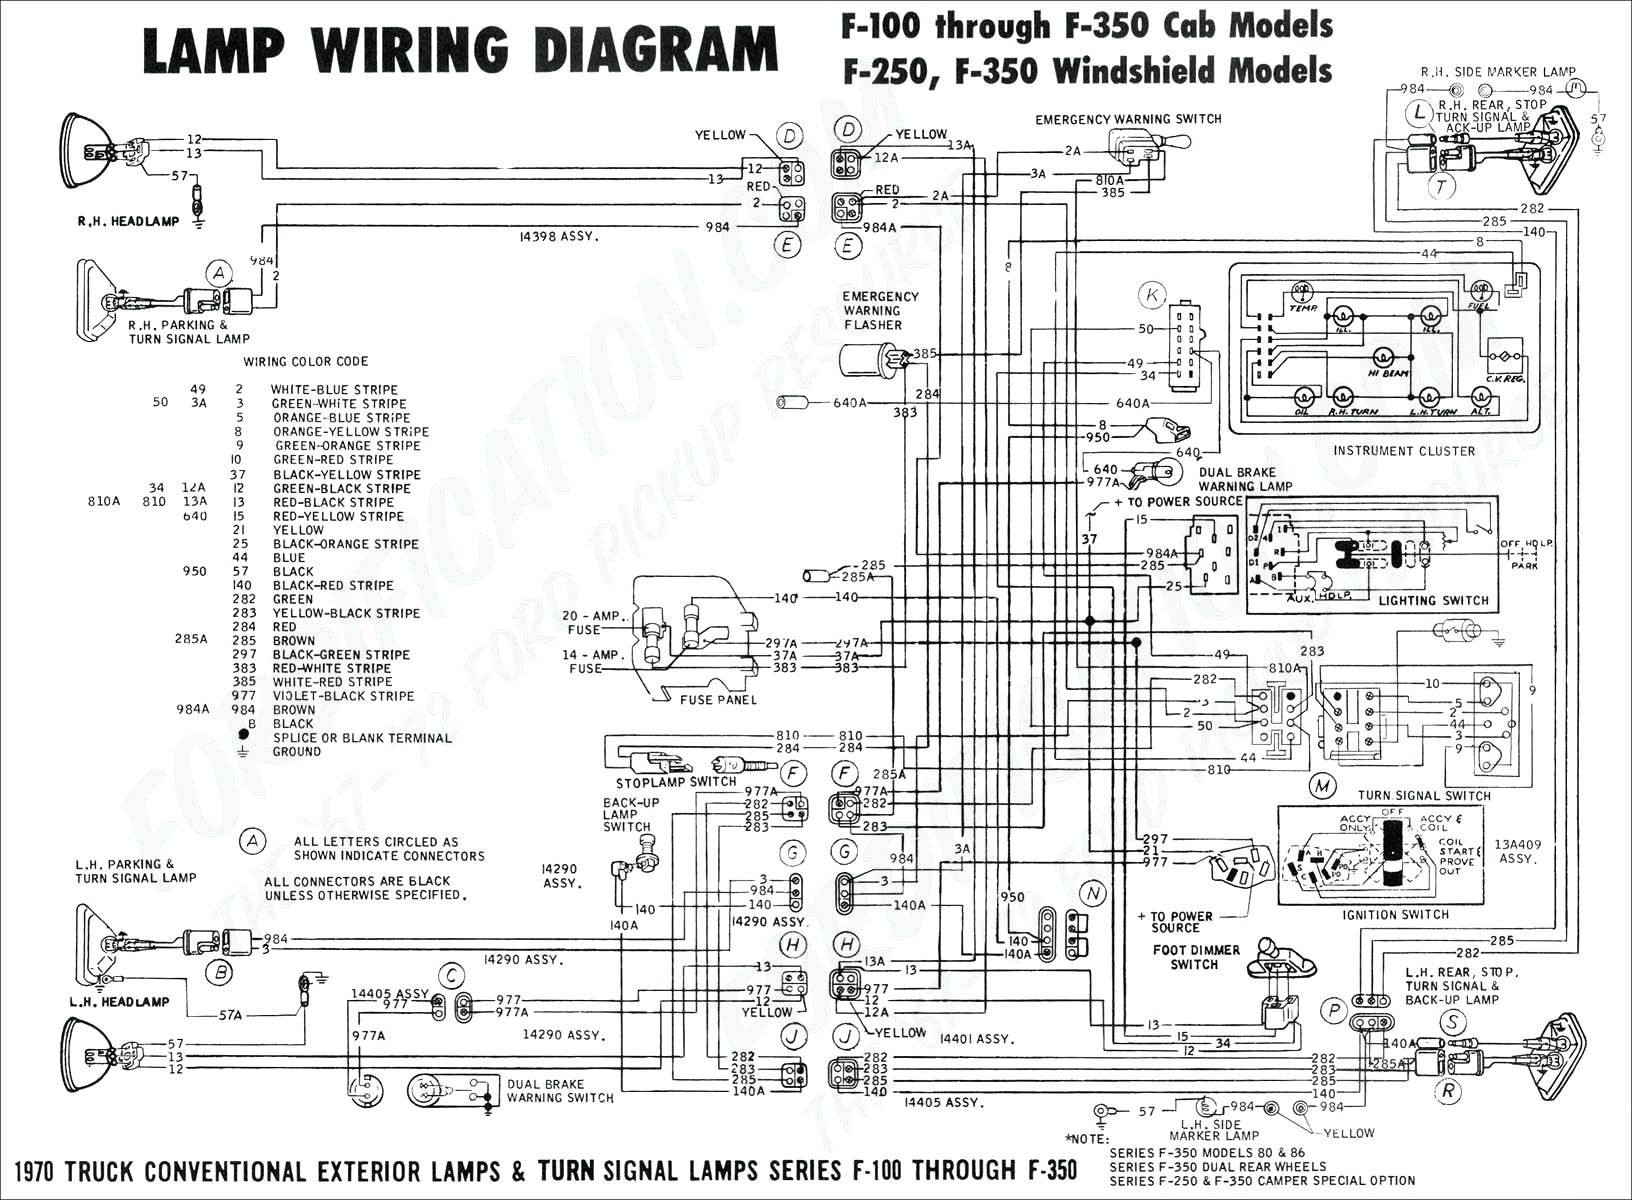 2003 Silverado Tail Light Wiring Diagram 2003 Silverado 1500 Wiring Diagram Of 2003 Silverado Tail Light Wiring Diagram